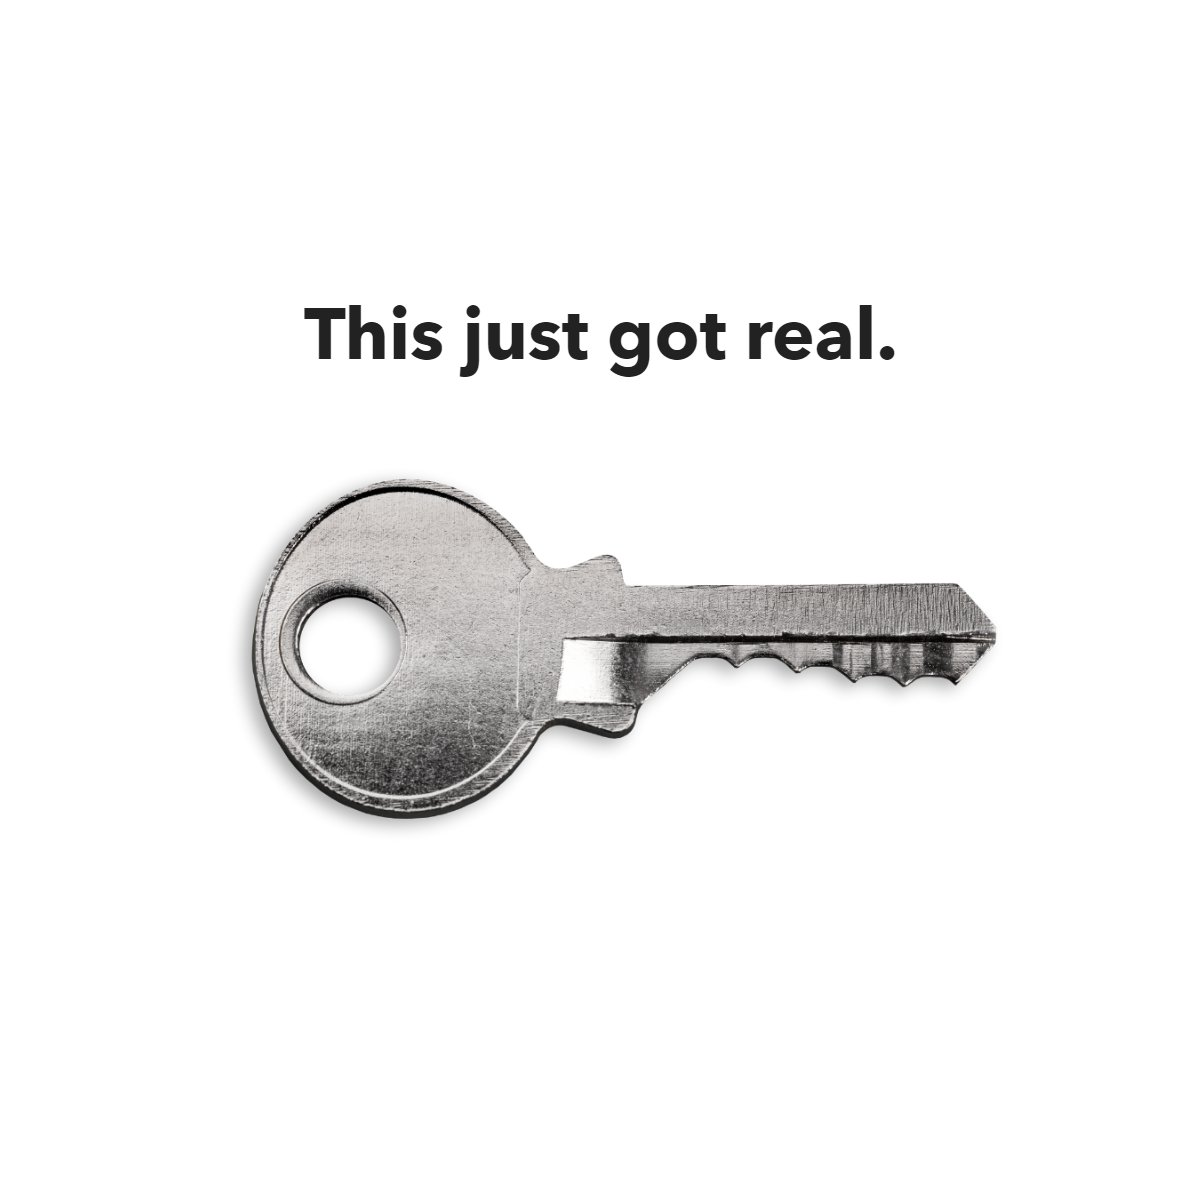 The moment when it gets real... 🗝️

#realestate     #keys     #thisjustgotreal     #realestatejokes     #realestatehumor     #keytomydreamhome
#scottskarerealtor #realestate #realestateagent #buyers #sellers #waterfront #waterfrontlife